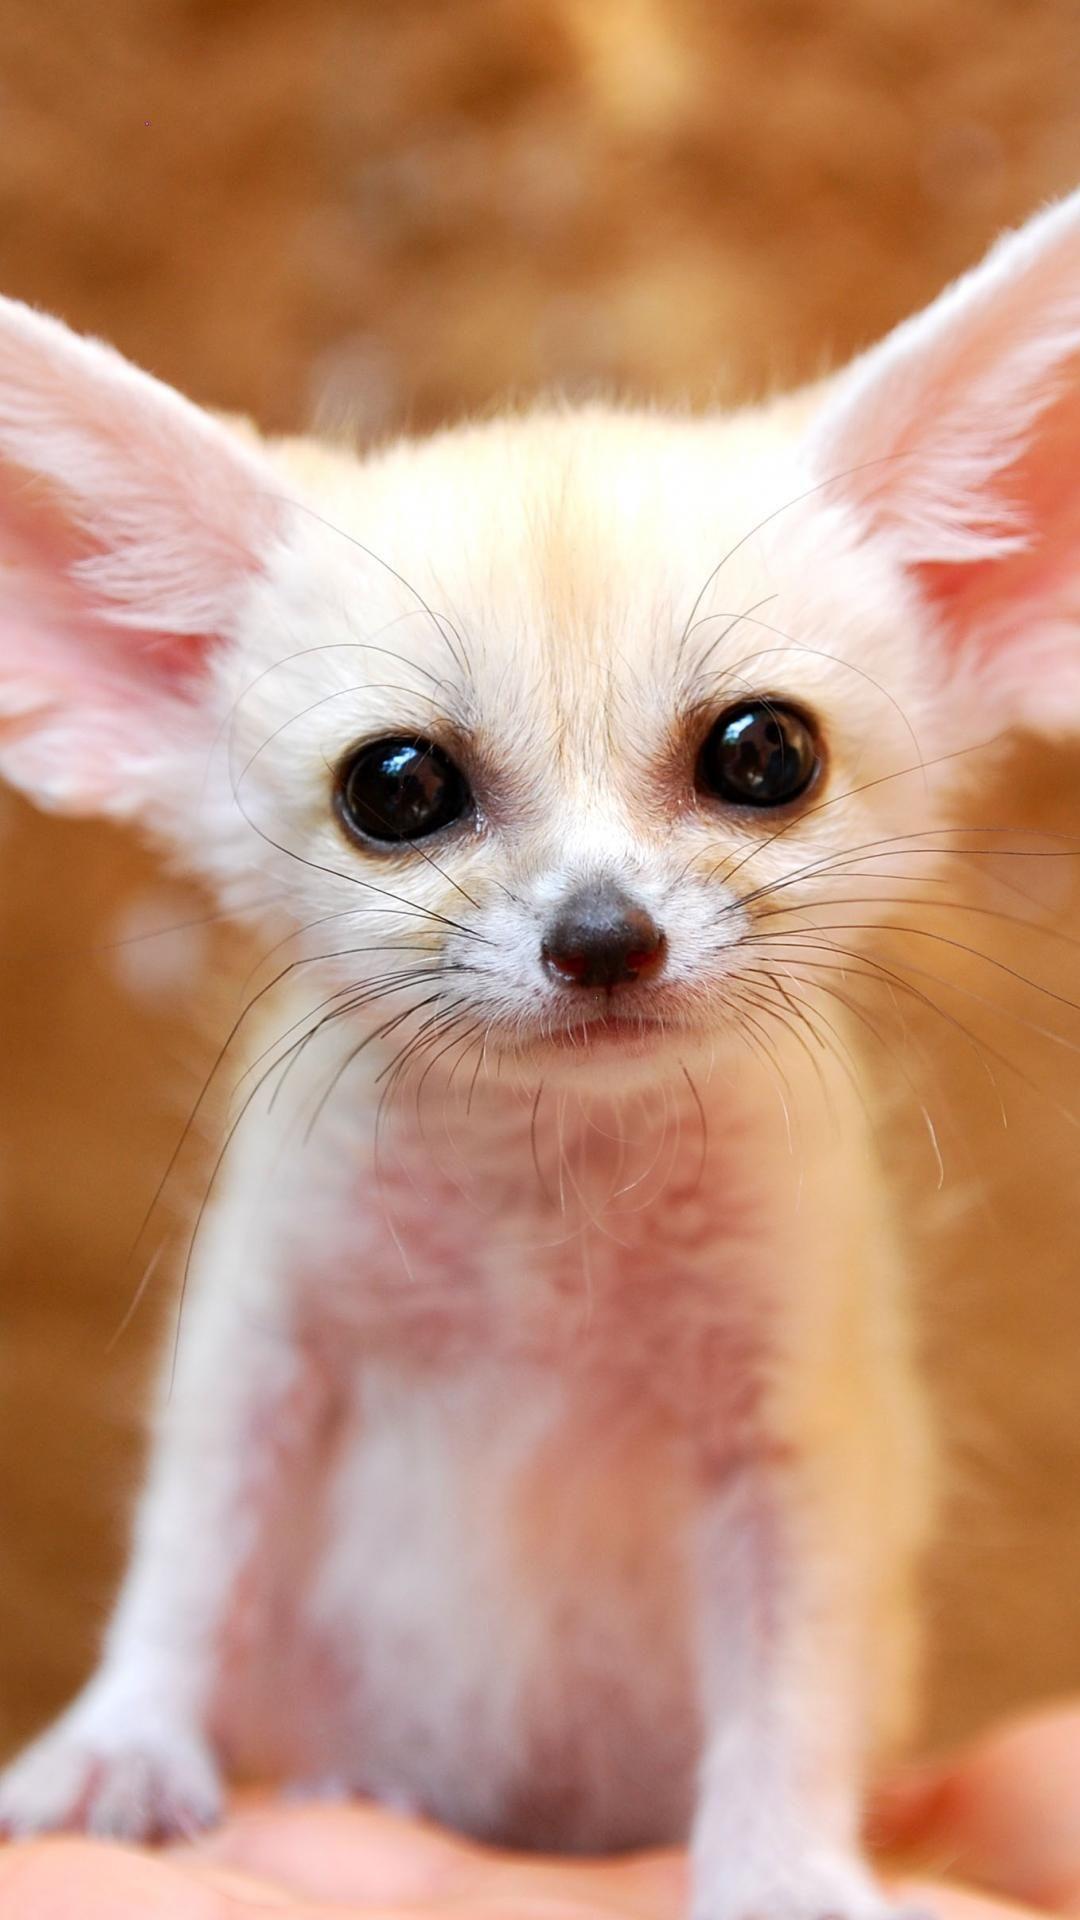 Full Grown Fennec Fox.. Cute baby puppies